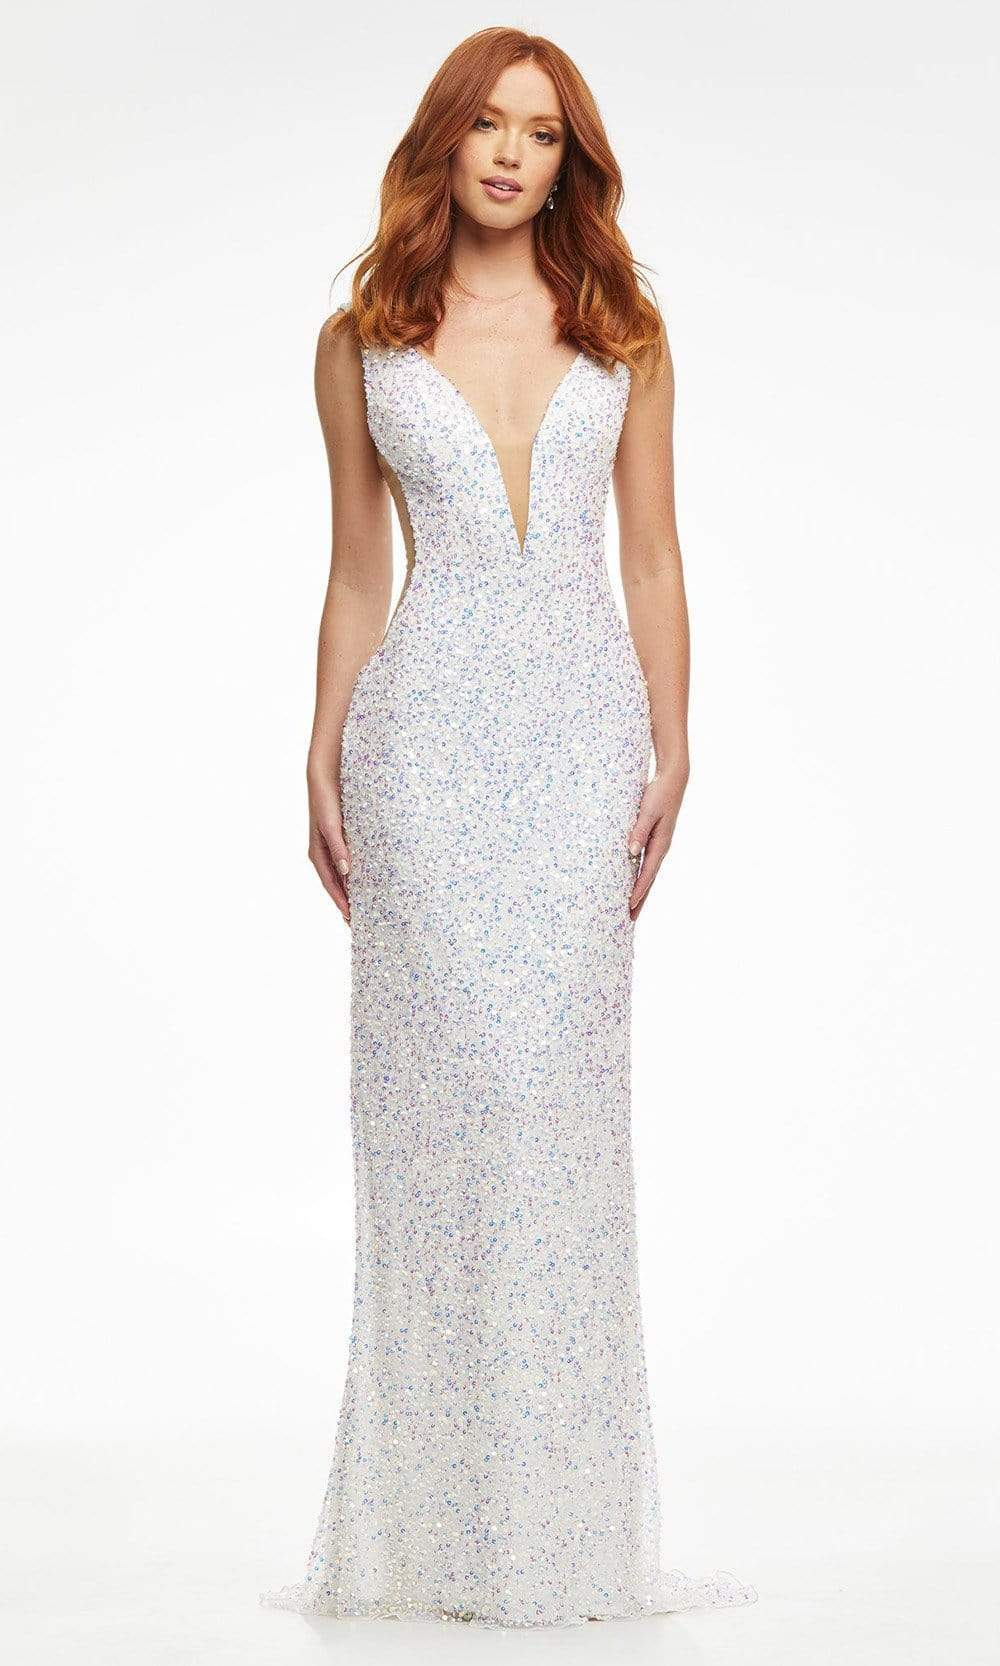 Ashley Lauren - 11081 Fitted Sequin Evening Dress